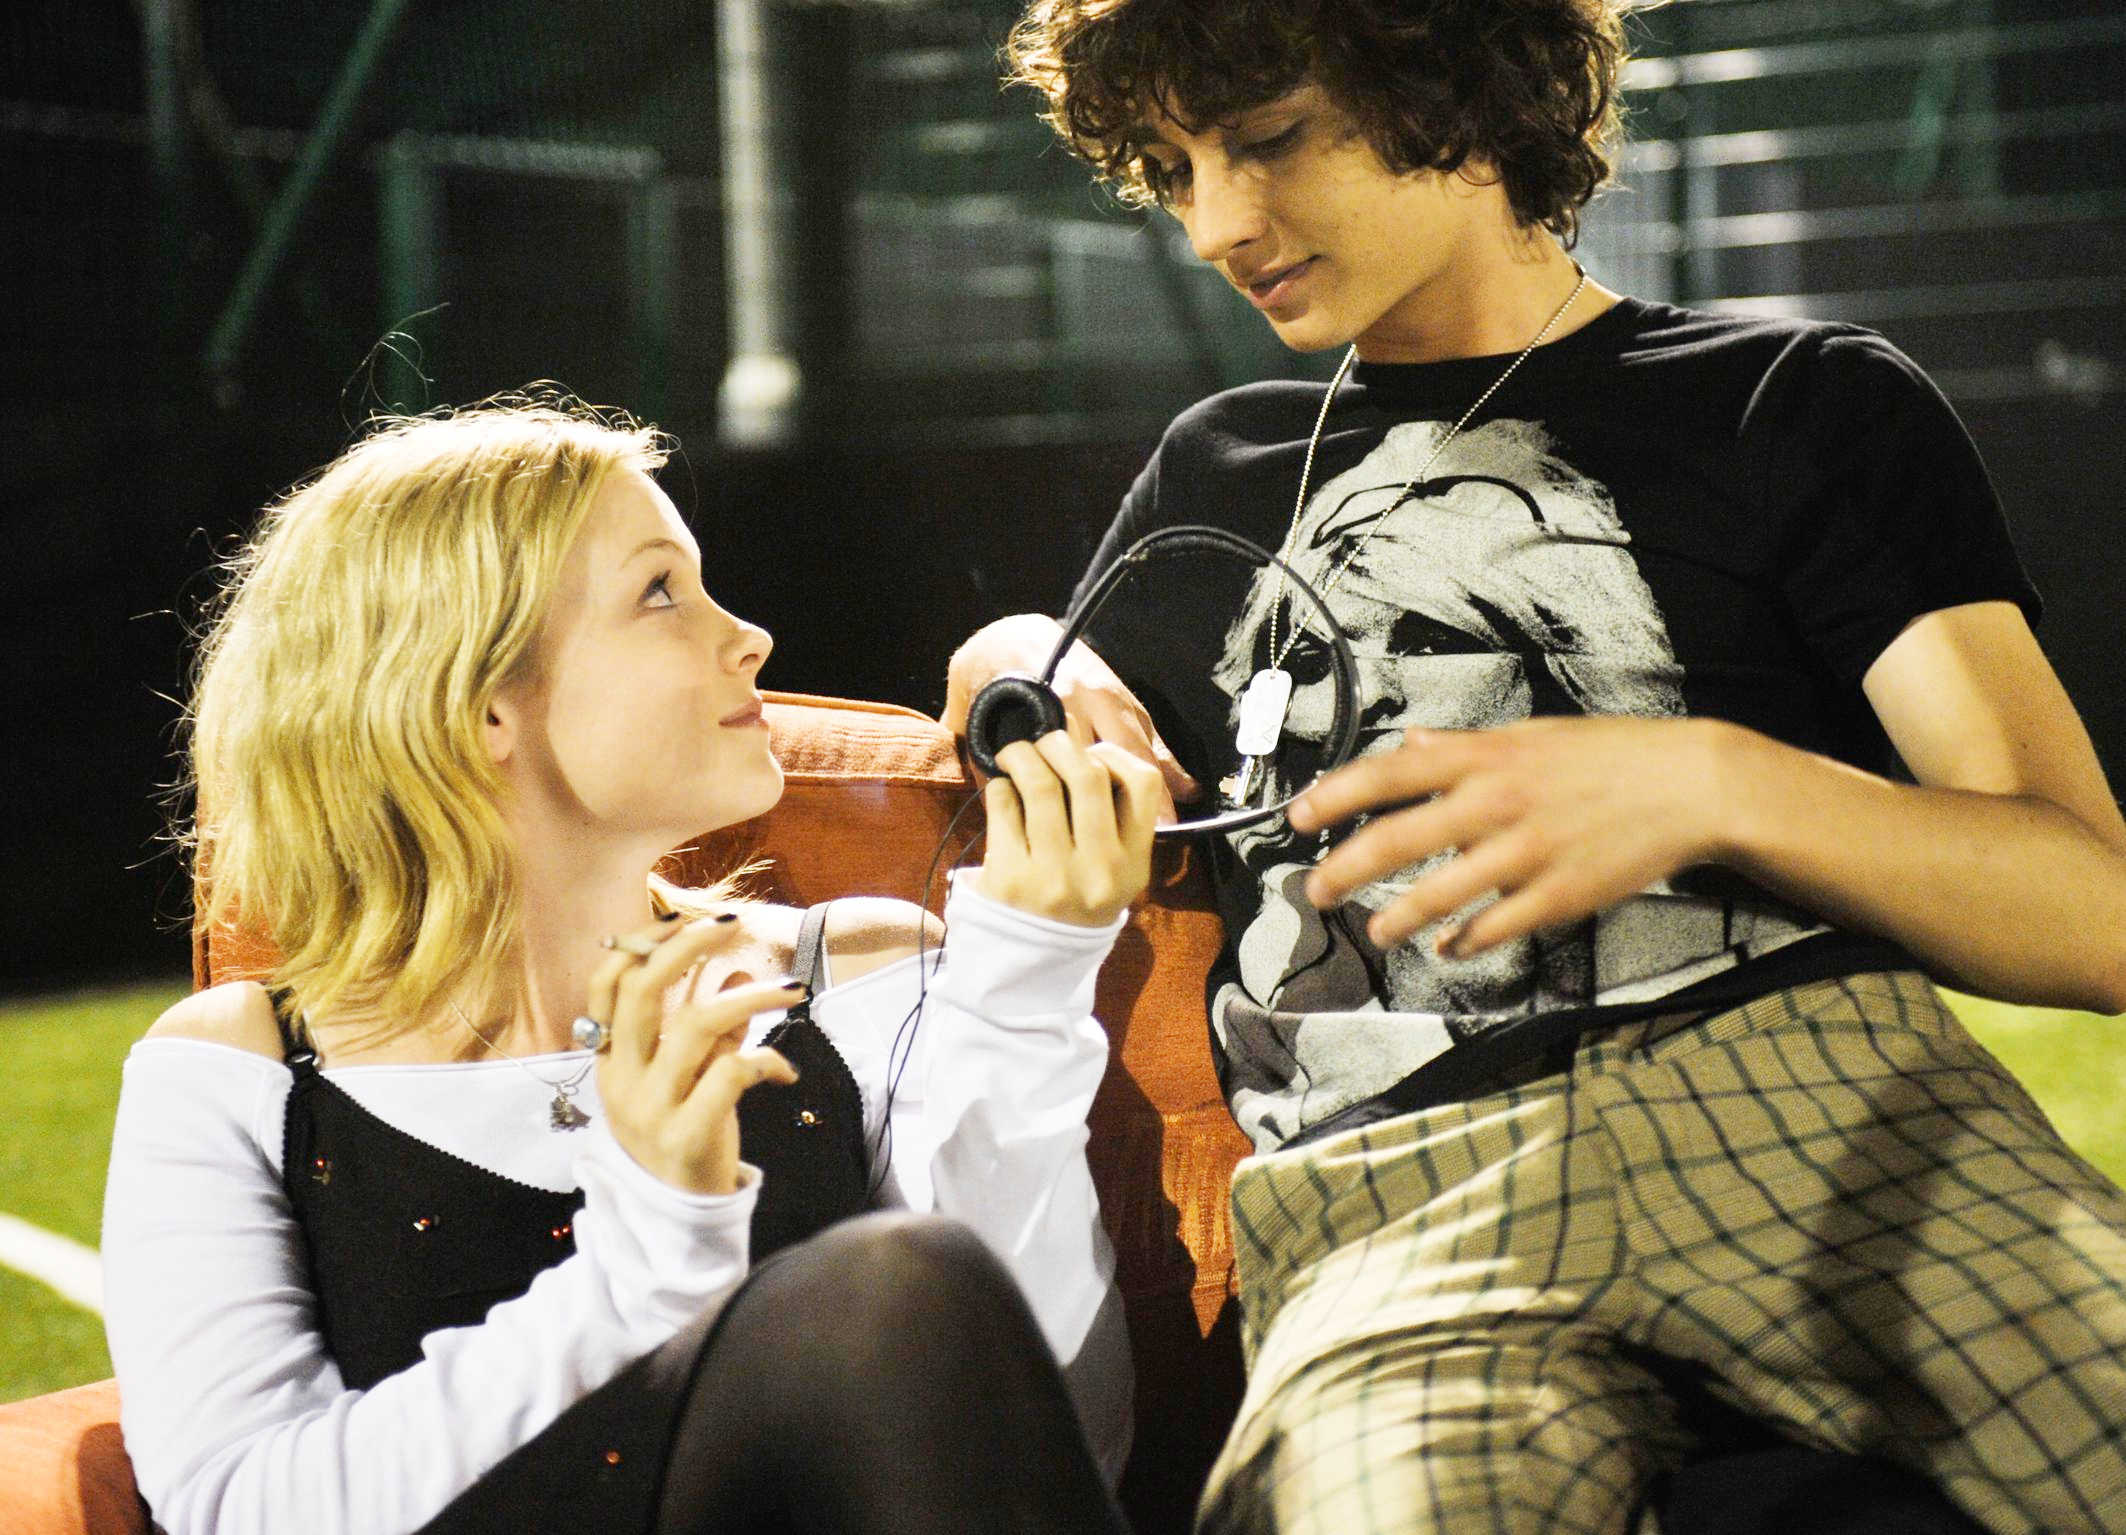 Kimberley Nixon stars as Michelle and Robert Sheehan stars as Luke in Little Film Company's Cherrybomb (2009)